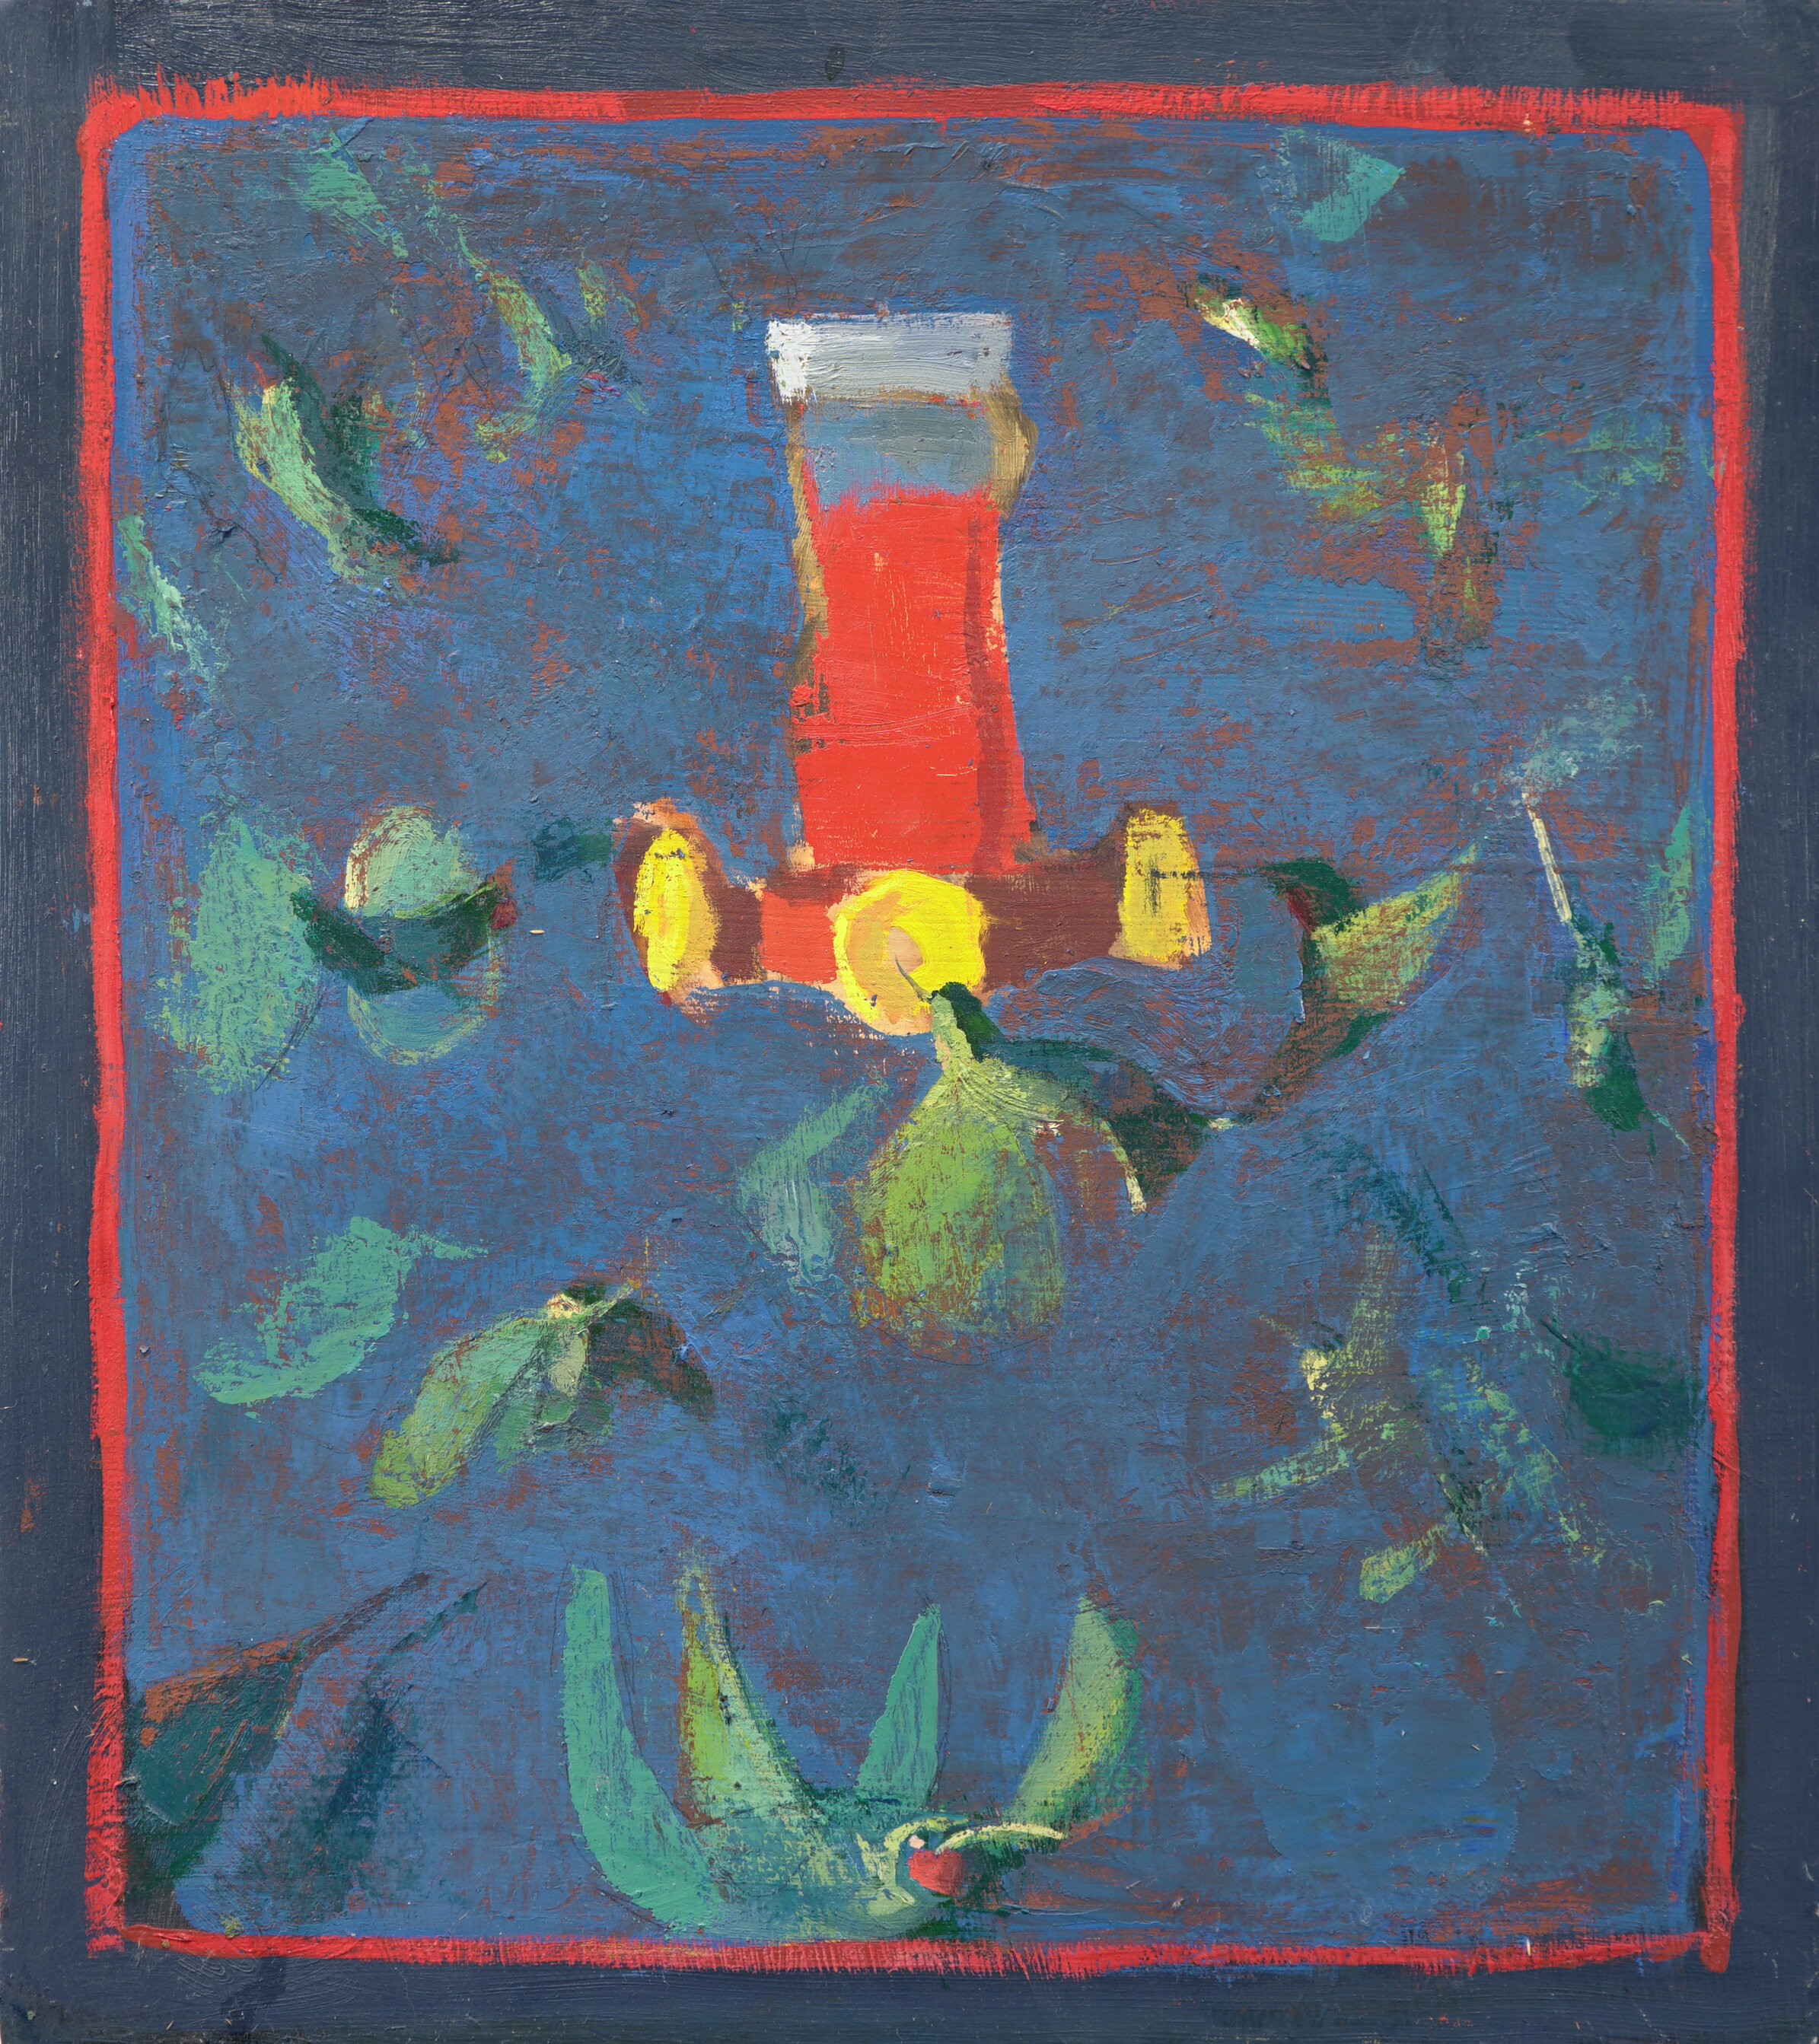 Hummingbirds, 13.5" x 12", Oil on Board, 2020